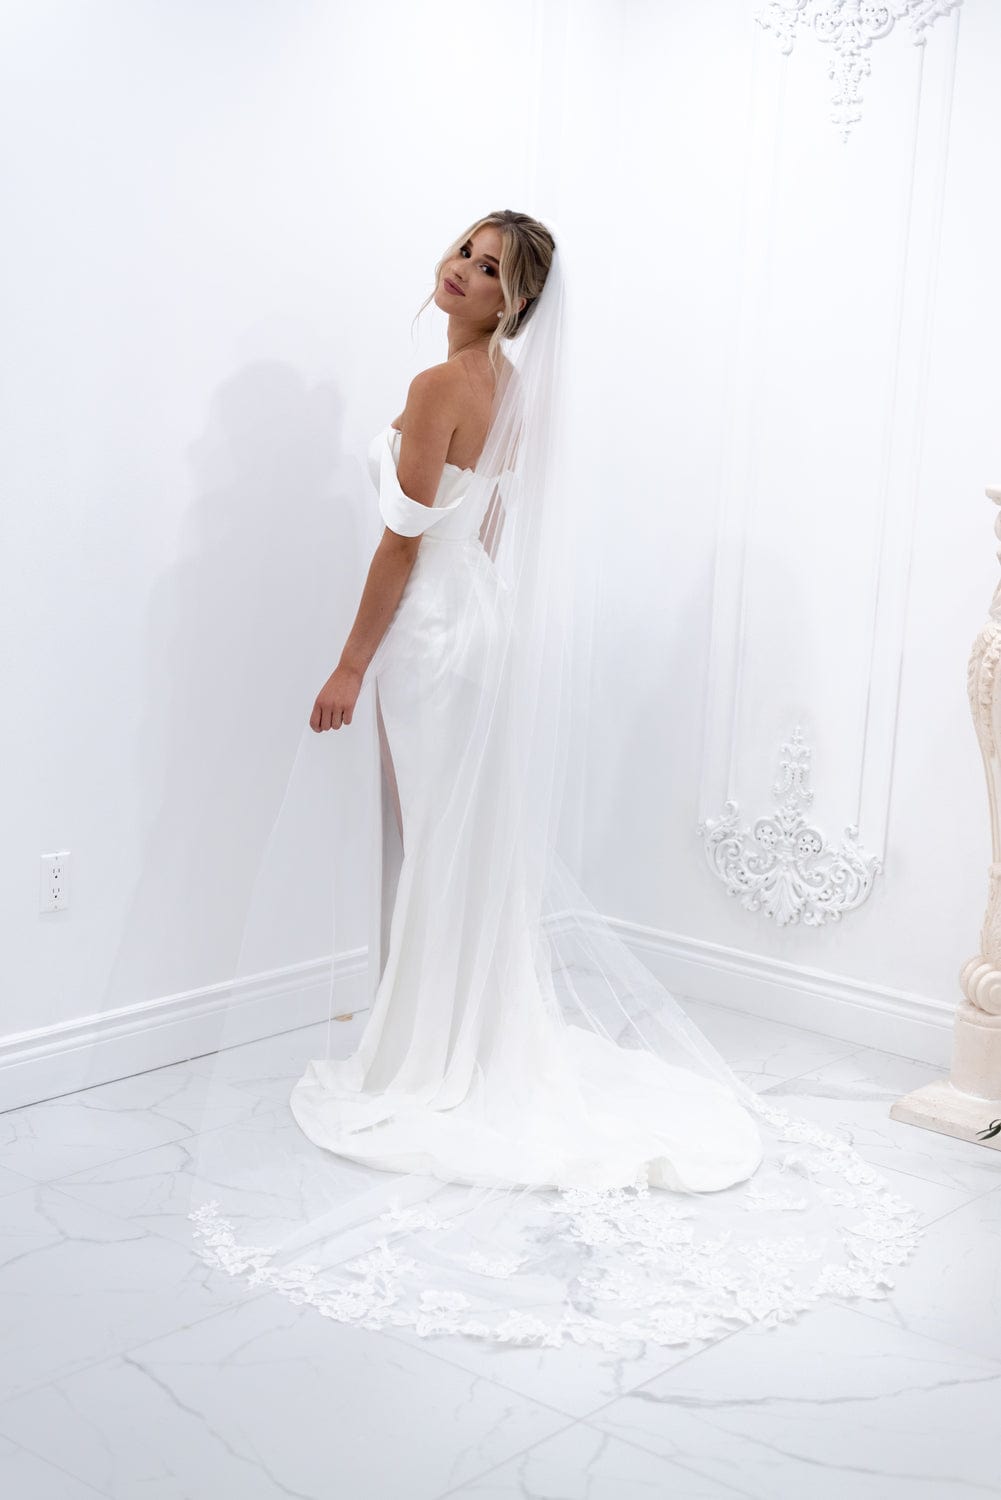 Chic Bridals Bridal Veils Ivory / 3x3.5 "Royal" Diva Veil Wedding Gowns